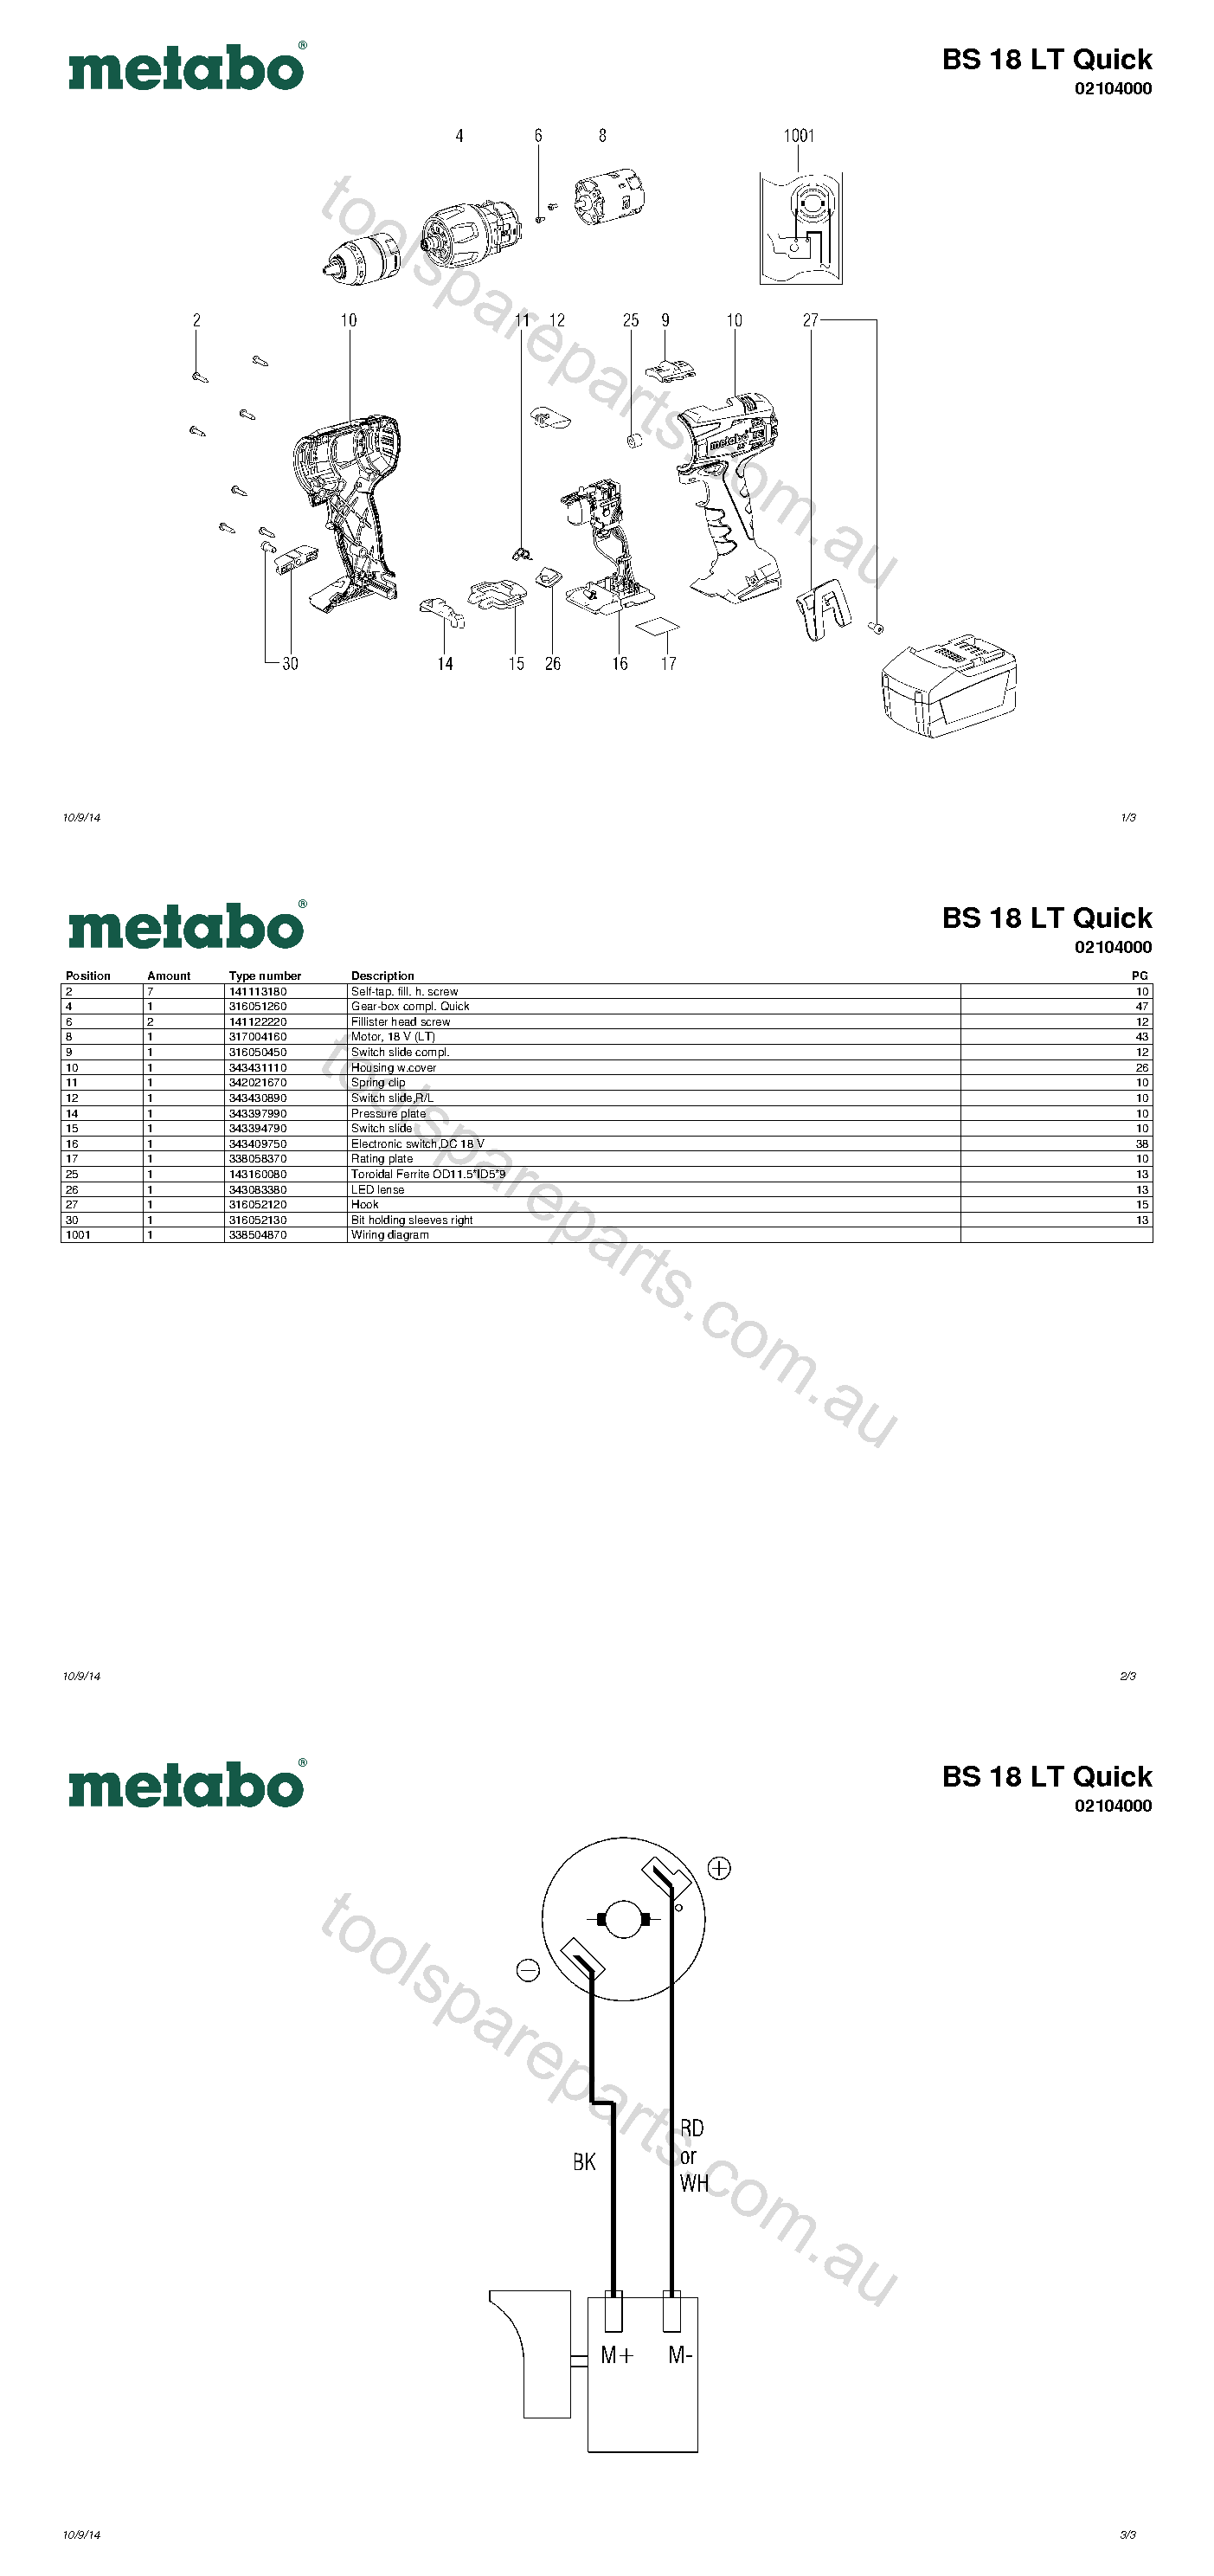 Metabo BS 18 LT Quick 02104000  Diagram 1